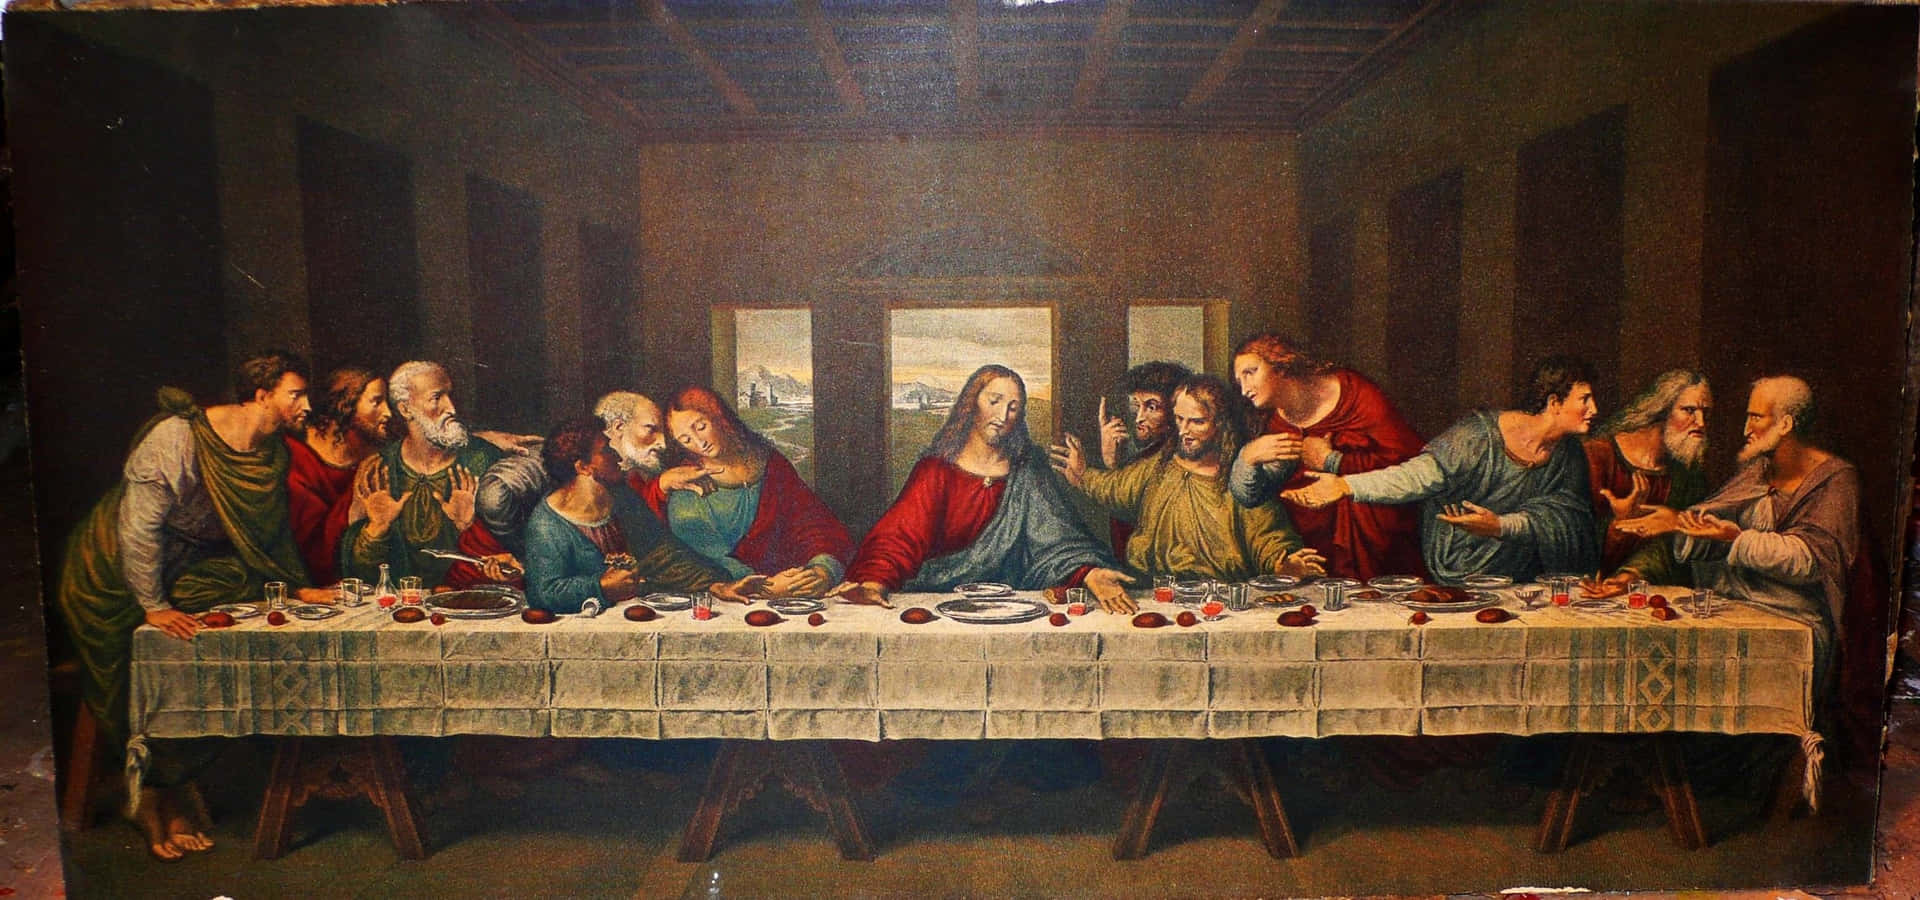 The Iconic Last Supper painting by Leonardo da Vinci Wallpaper